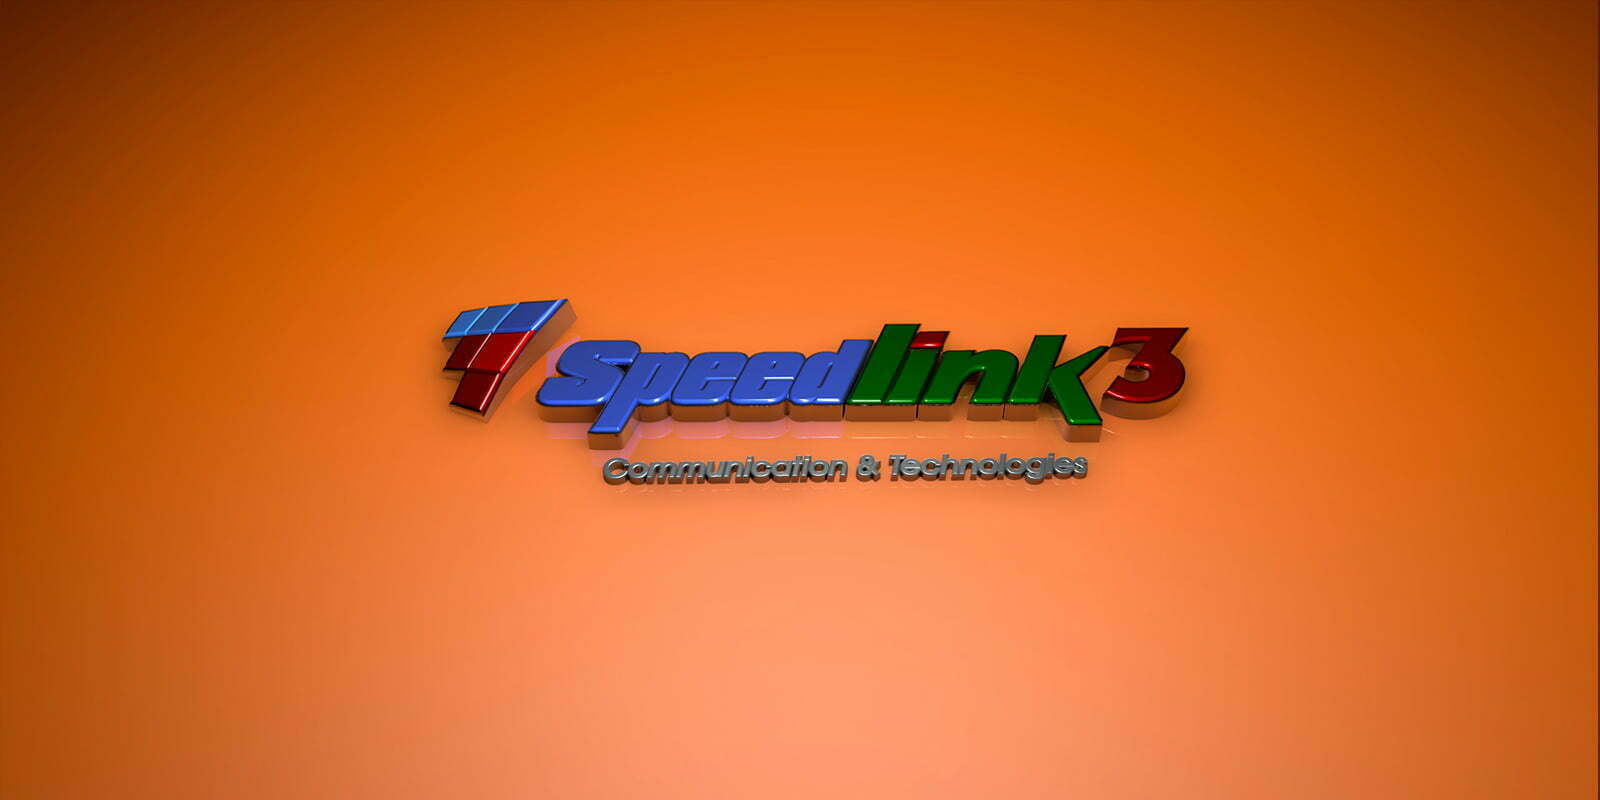 Speedlink3 Communication & Technologies